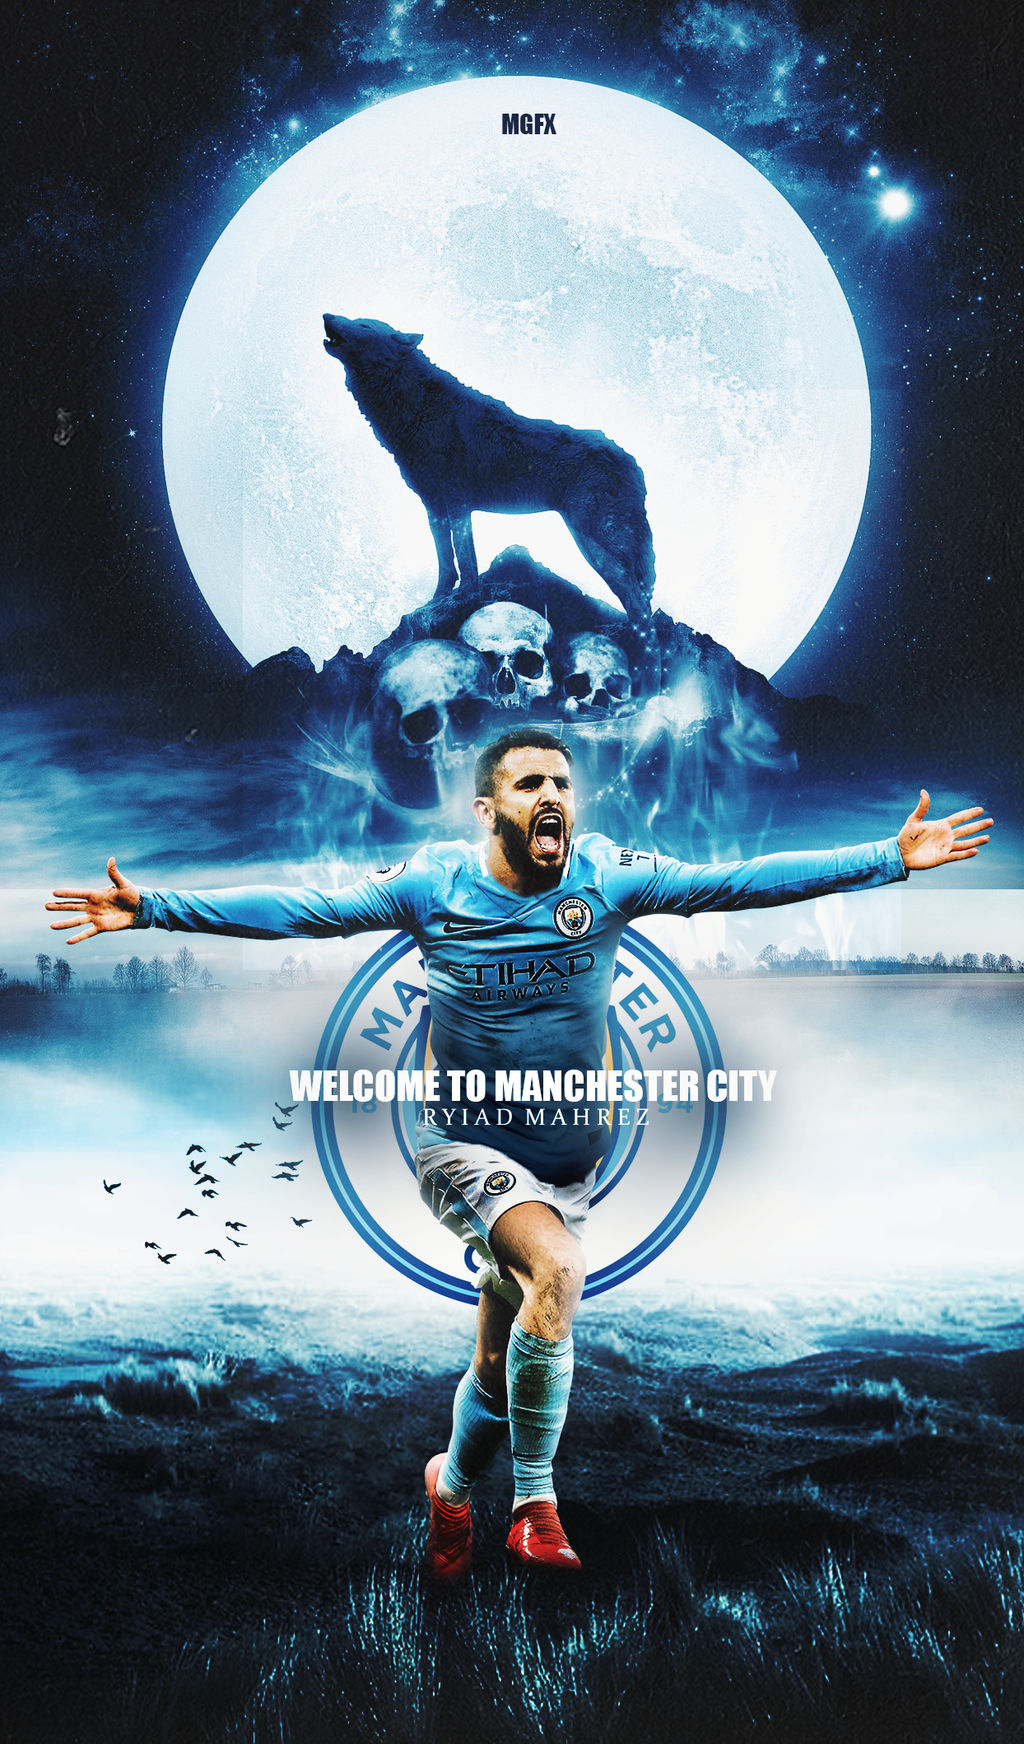 Ryiad Mahrez To Manchester City Wallpaper By 10mohamedmahmoud